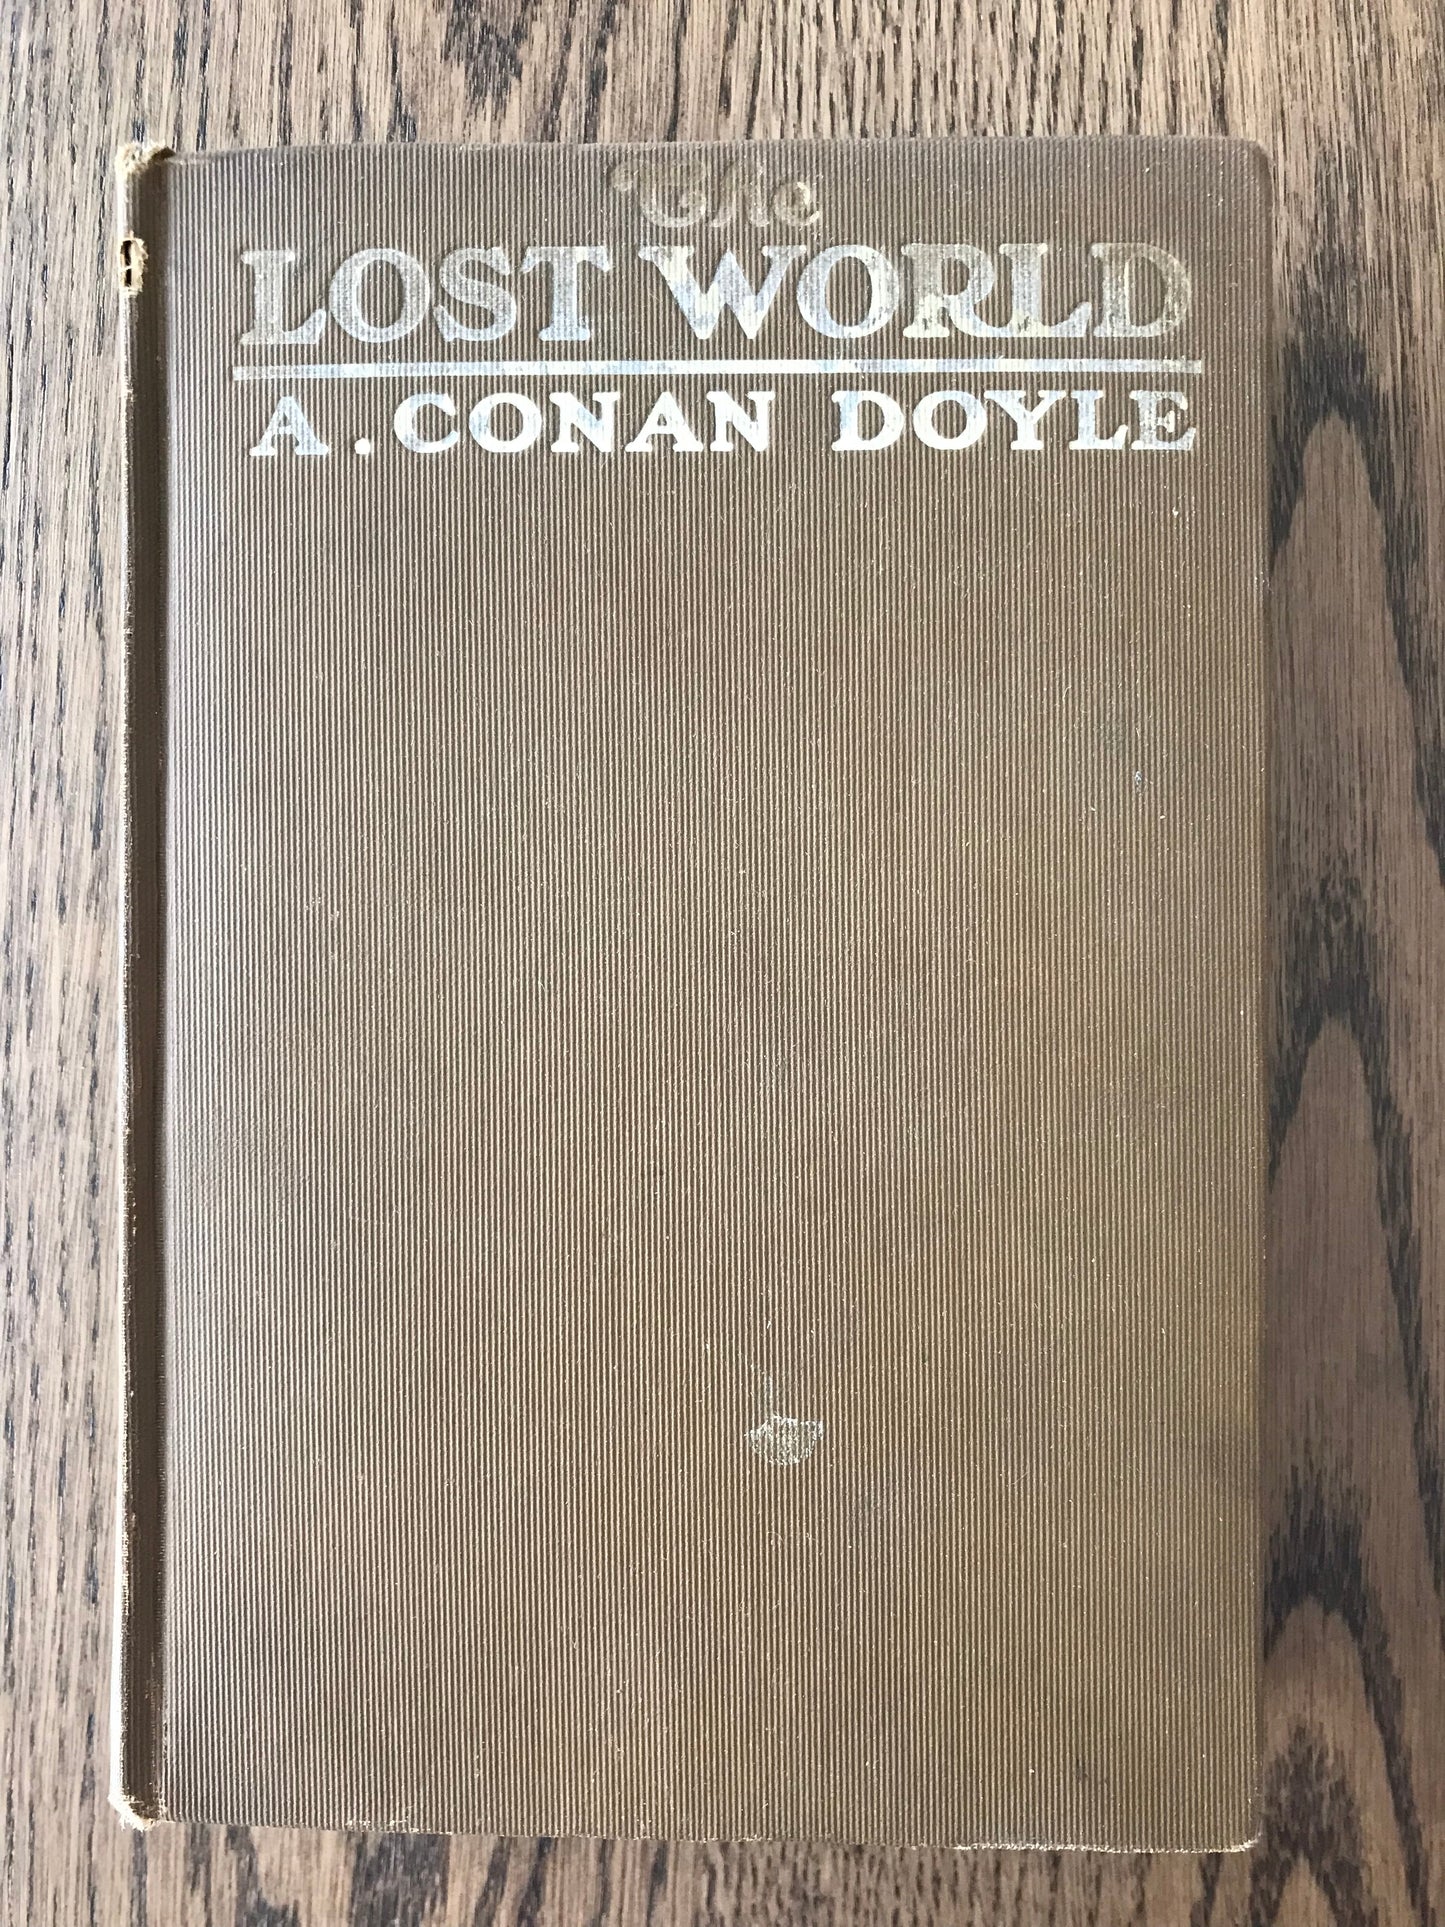 THE LOST WORLD  -         A. CONAN DOYLE BooksCardsNBikes